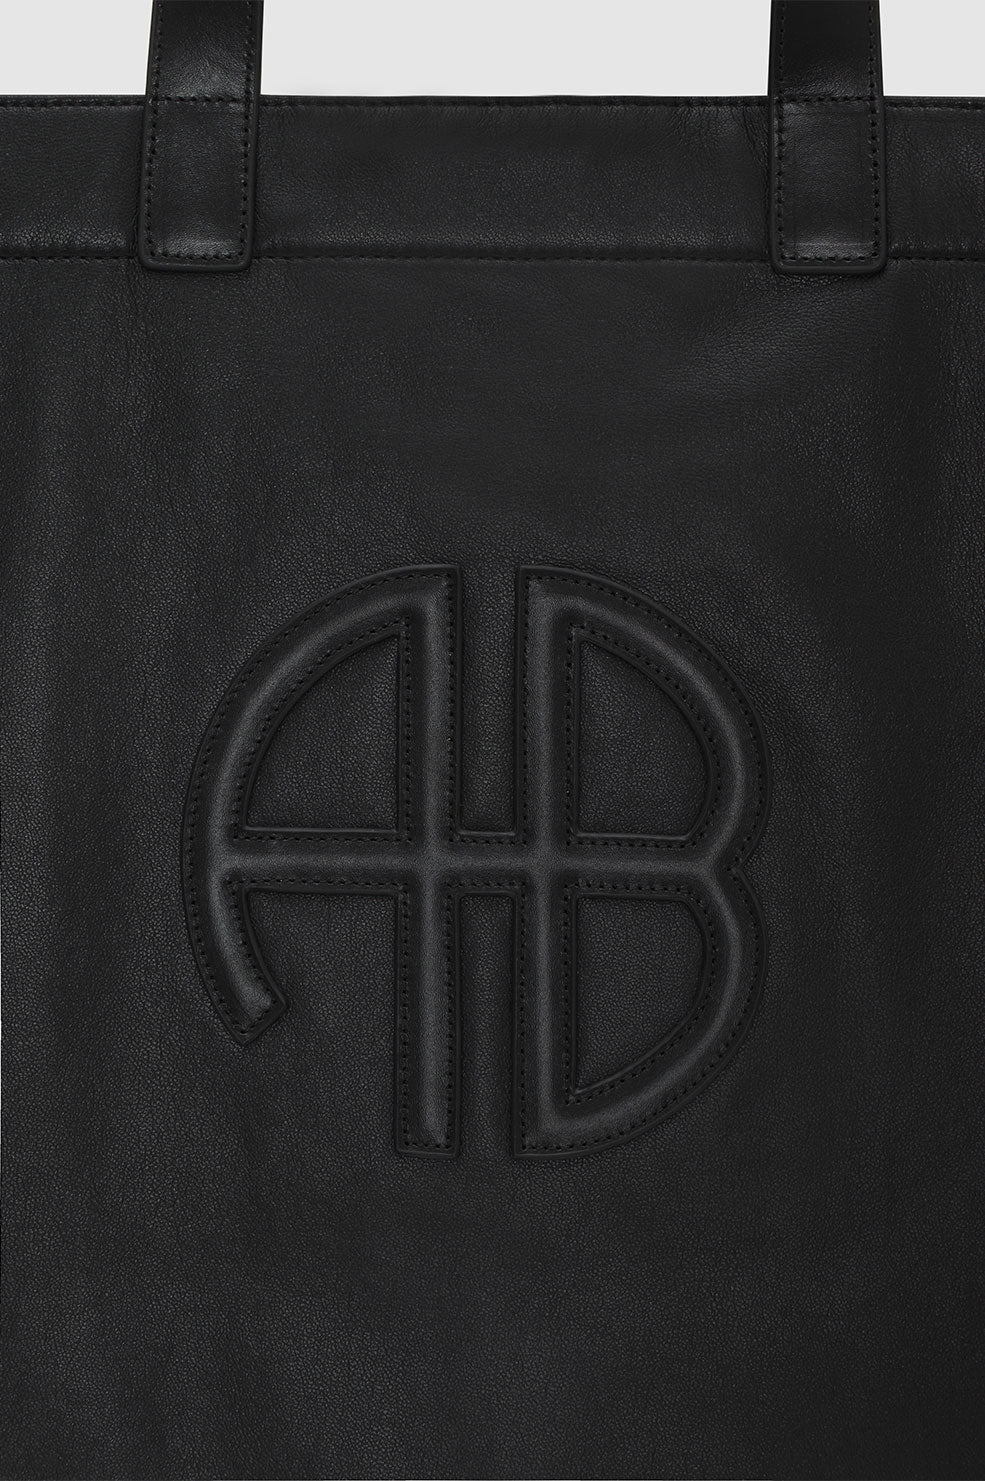 Calvin Klein Black Tote Bags